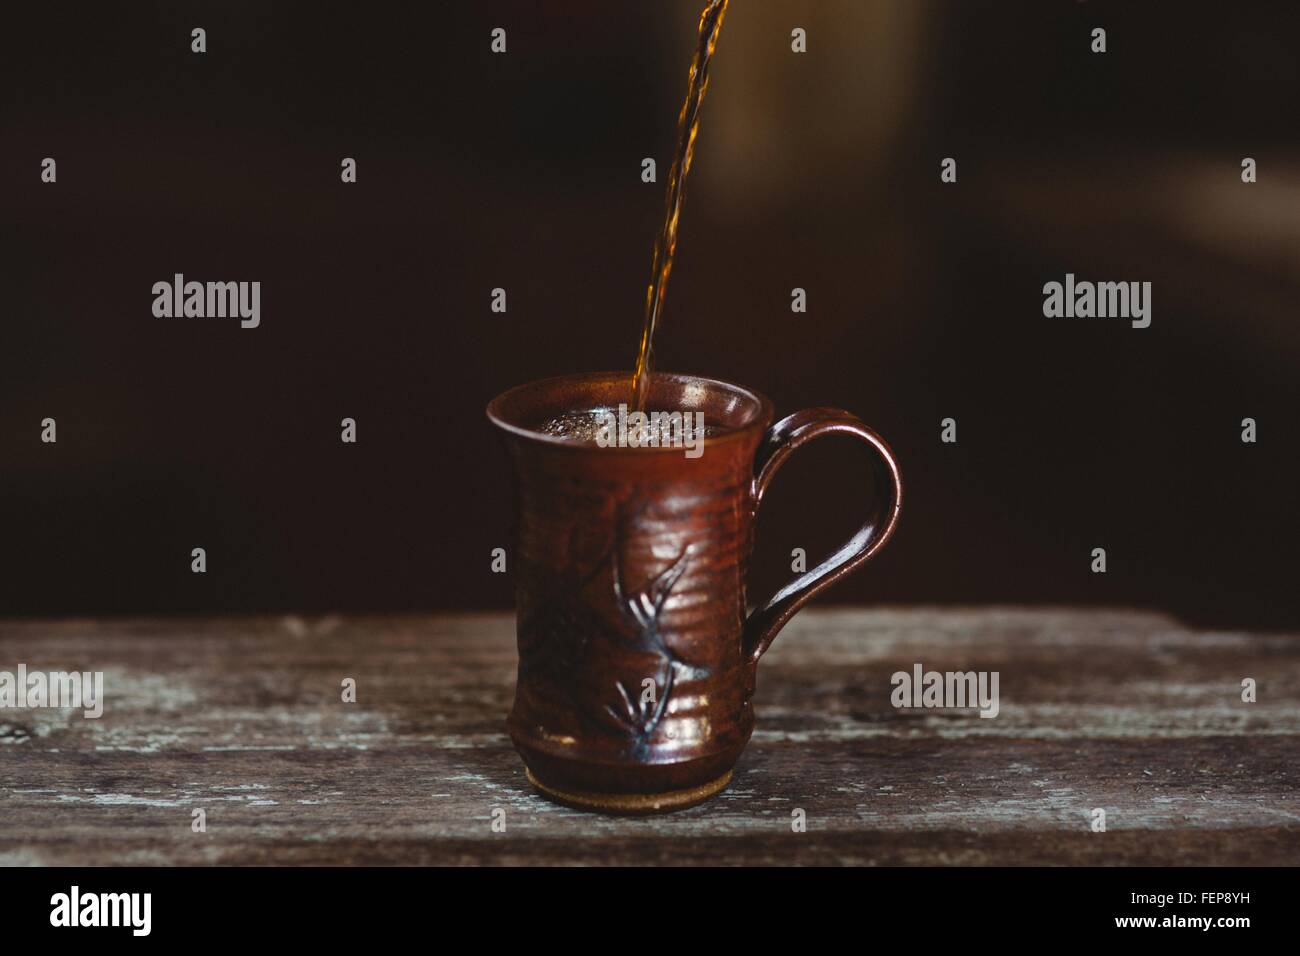 Coffee being poured into mug Stock Photo